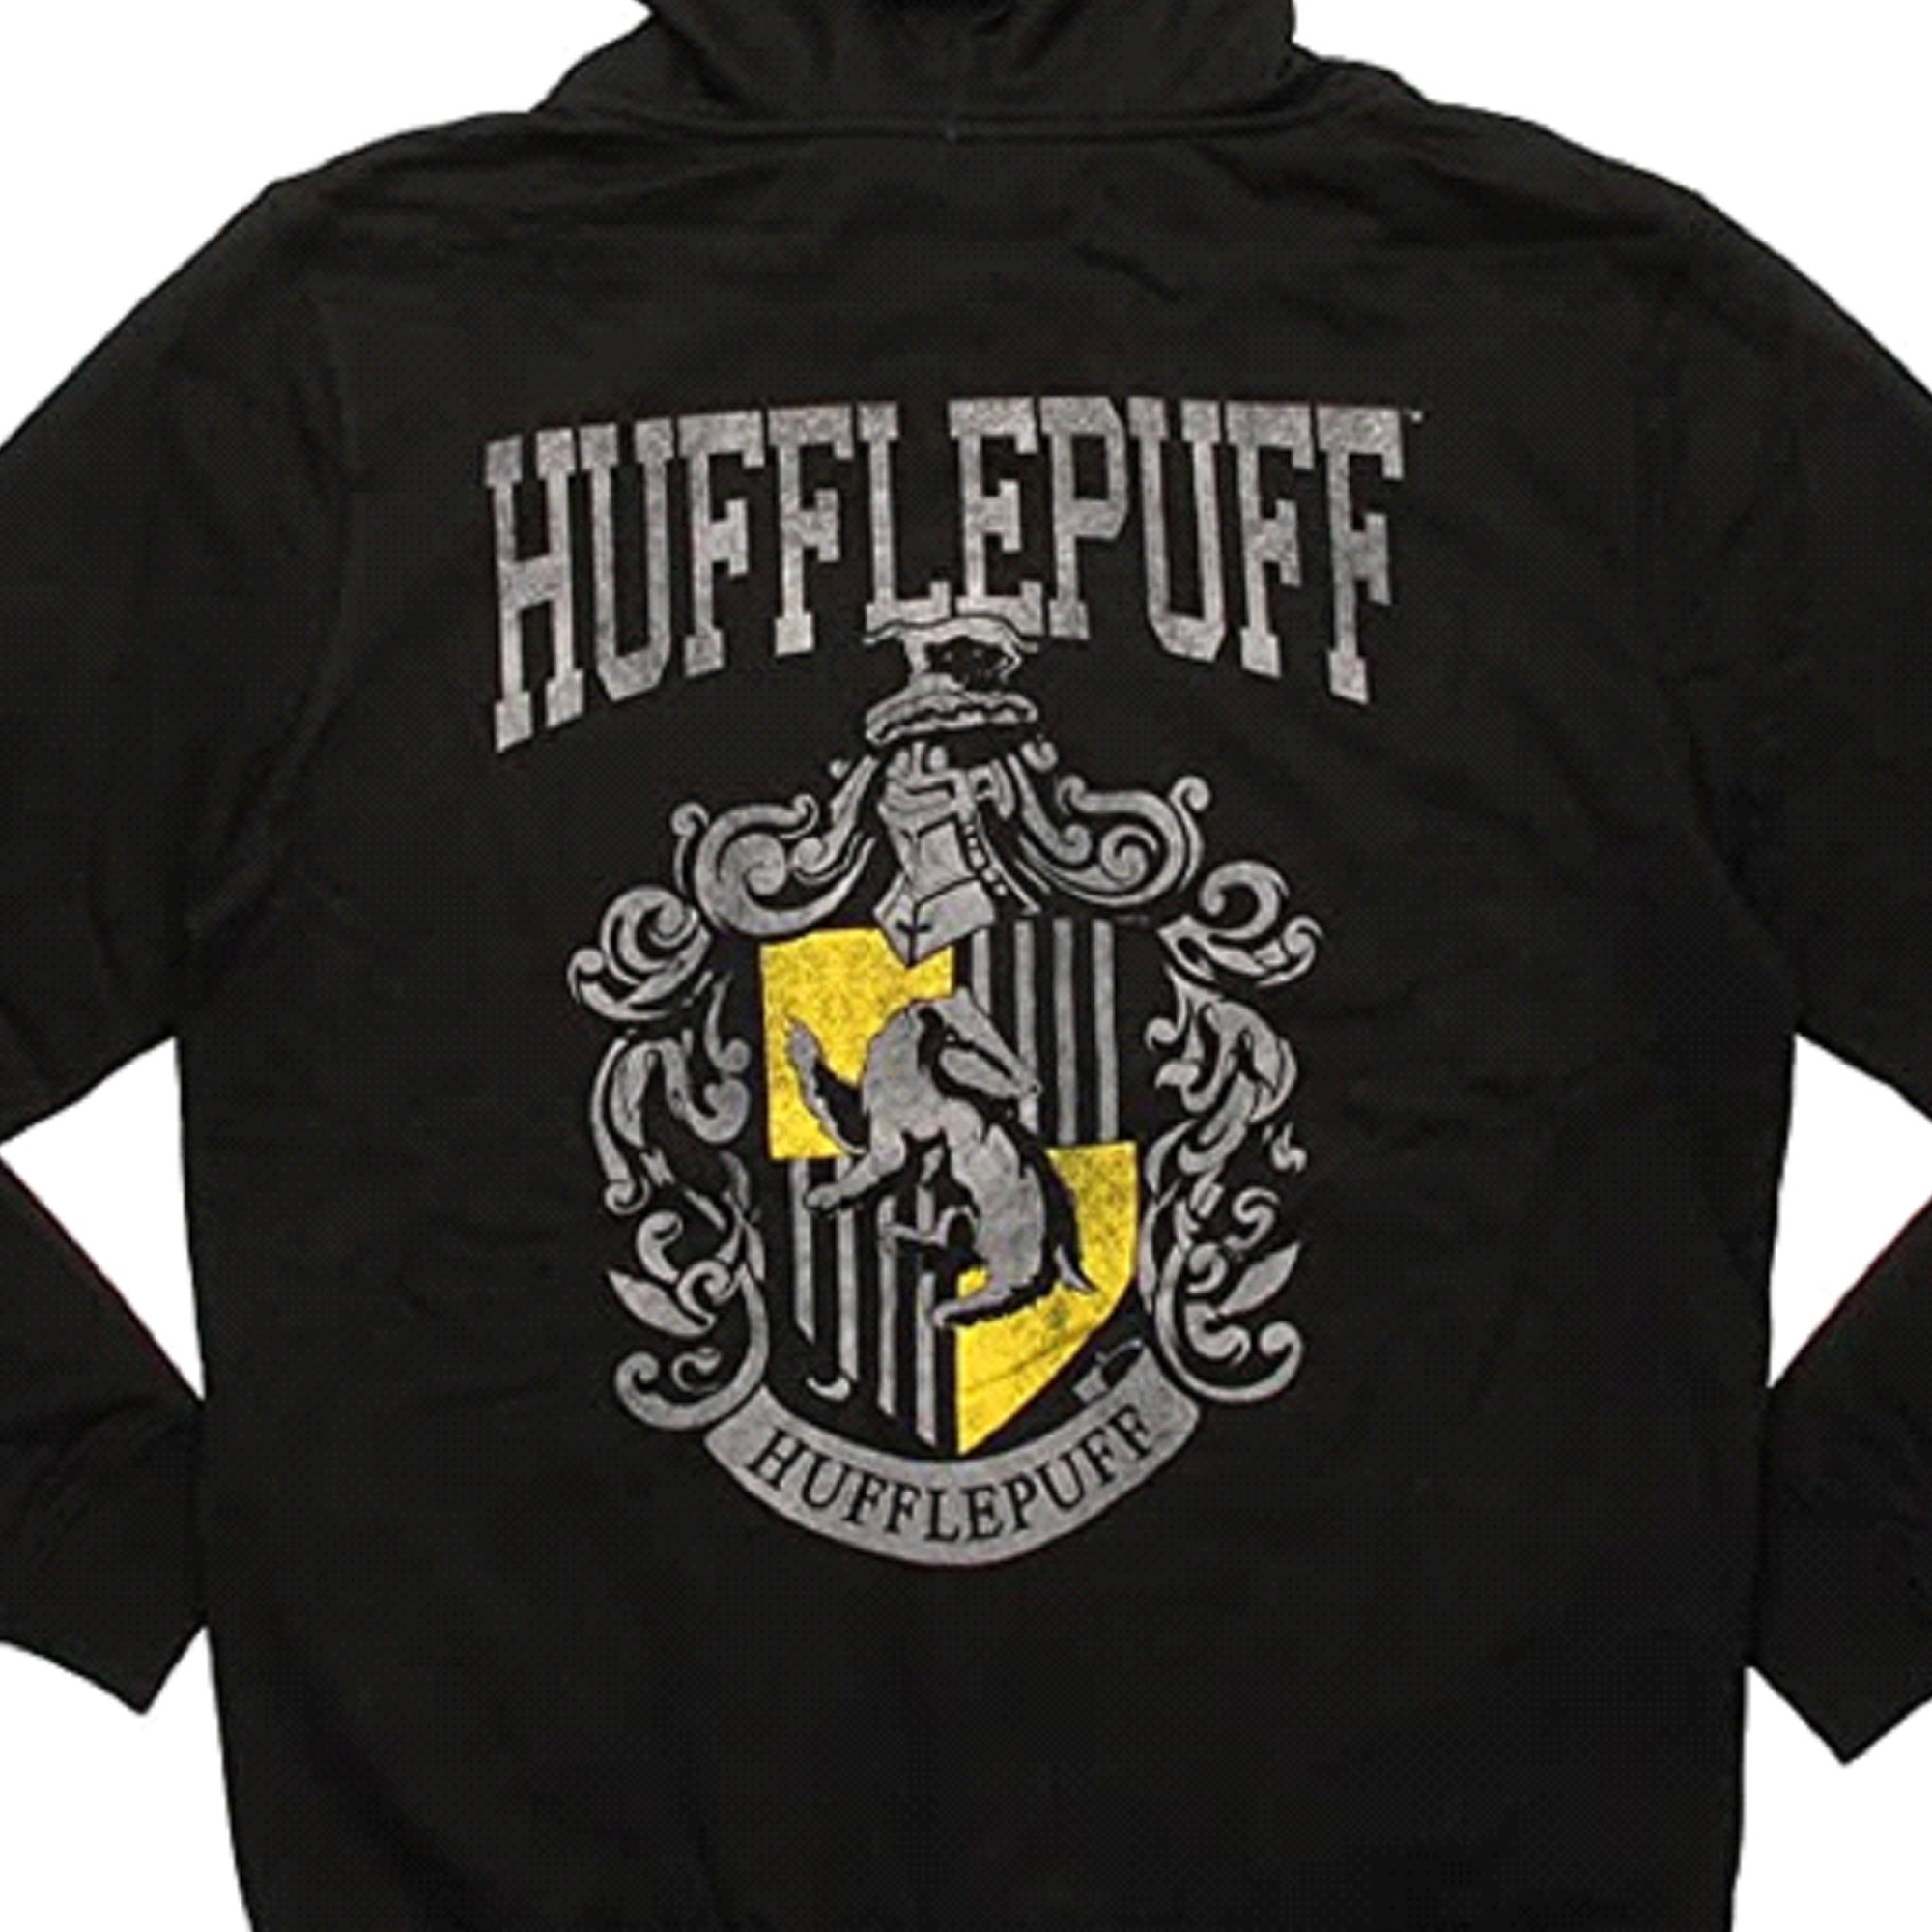 Harry Potter Hufflepuff Crest Adult Unisex Hoodie - size Large